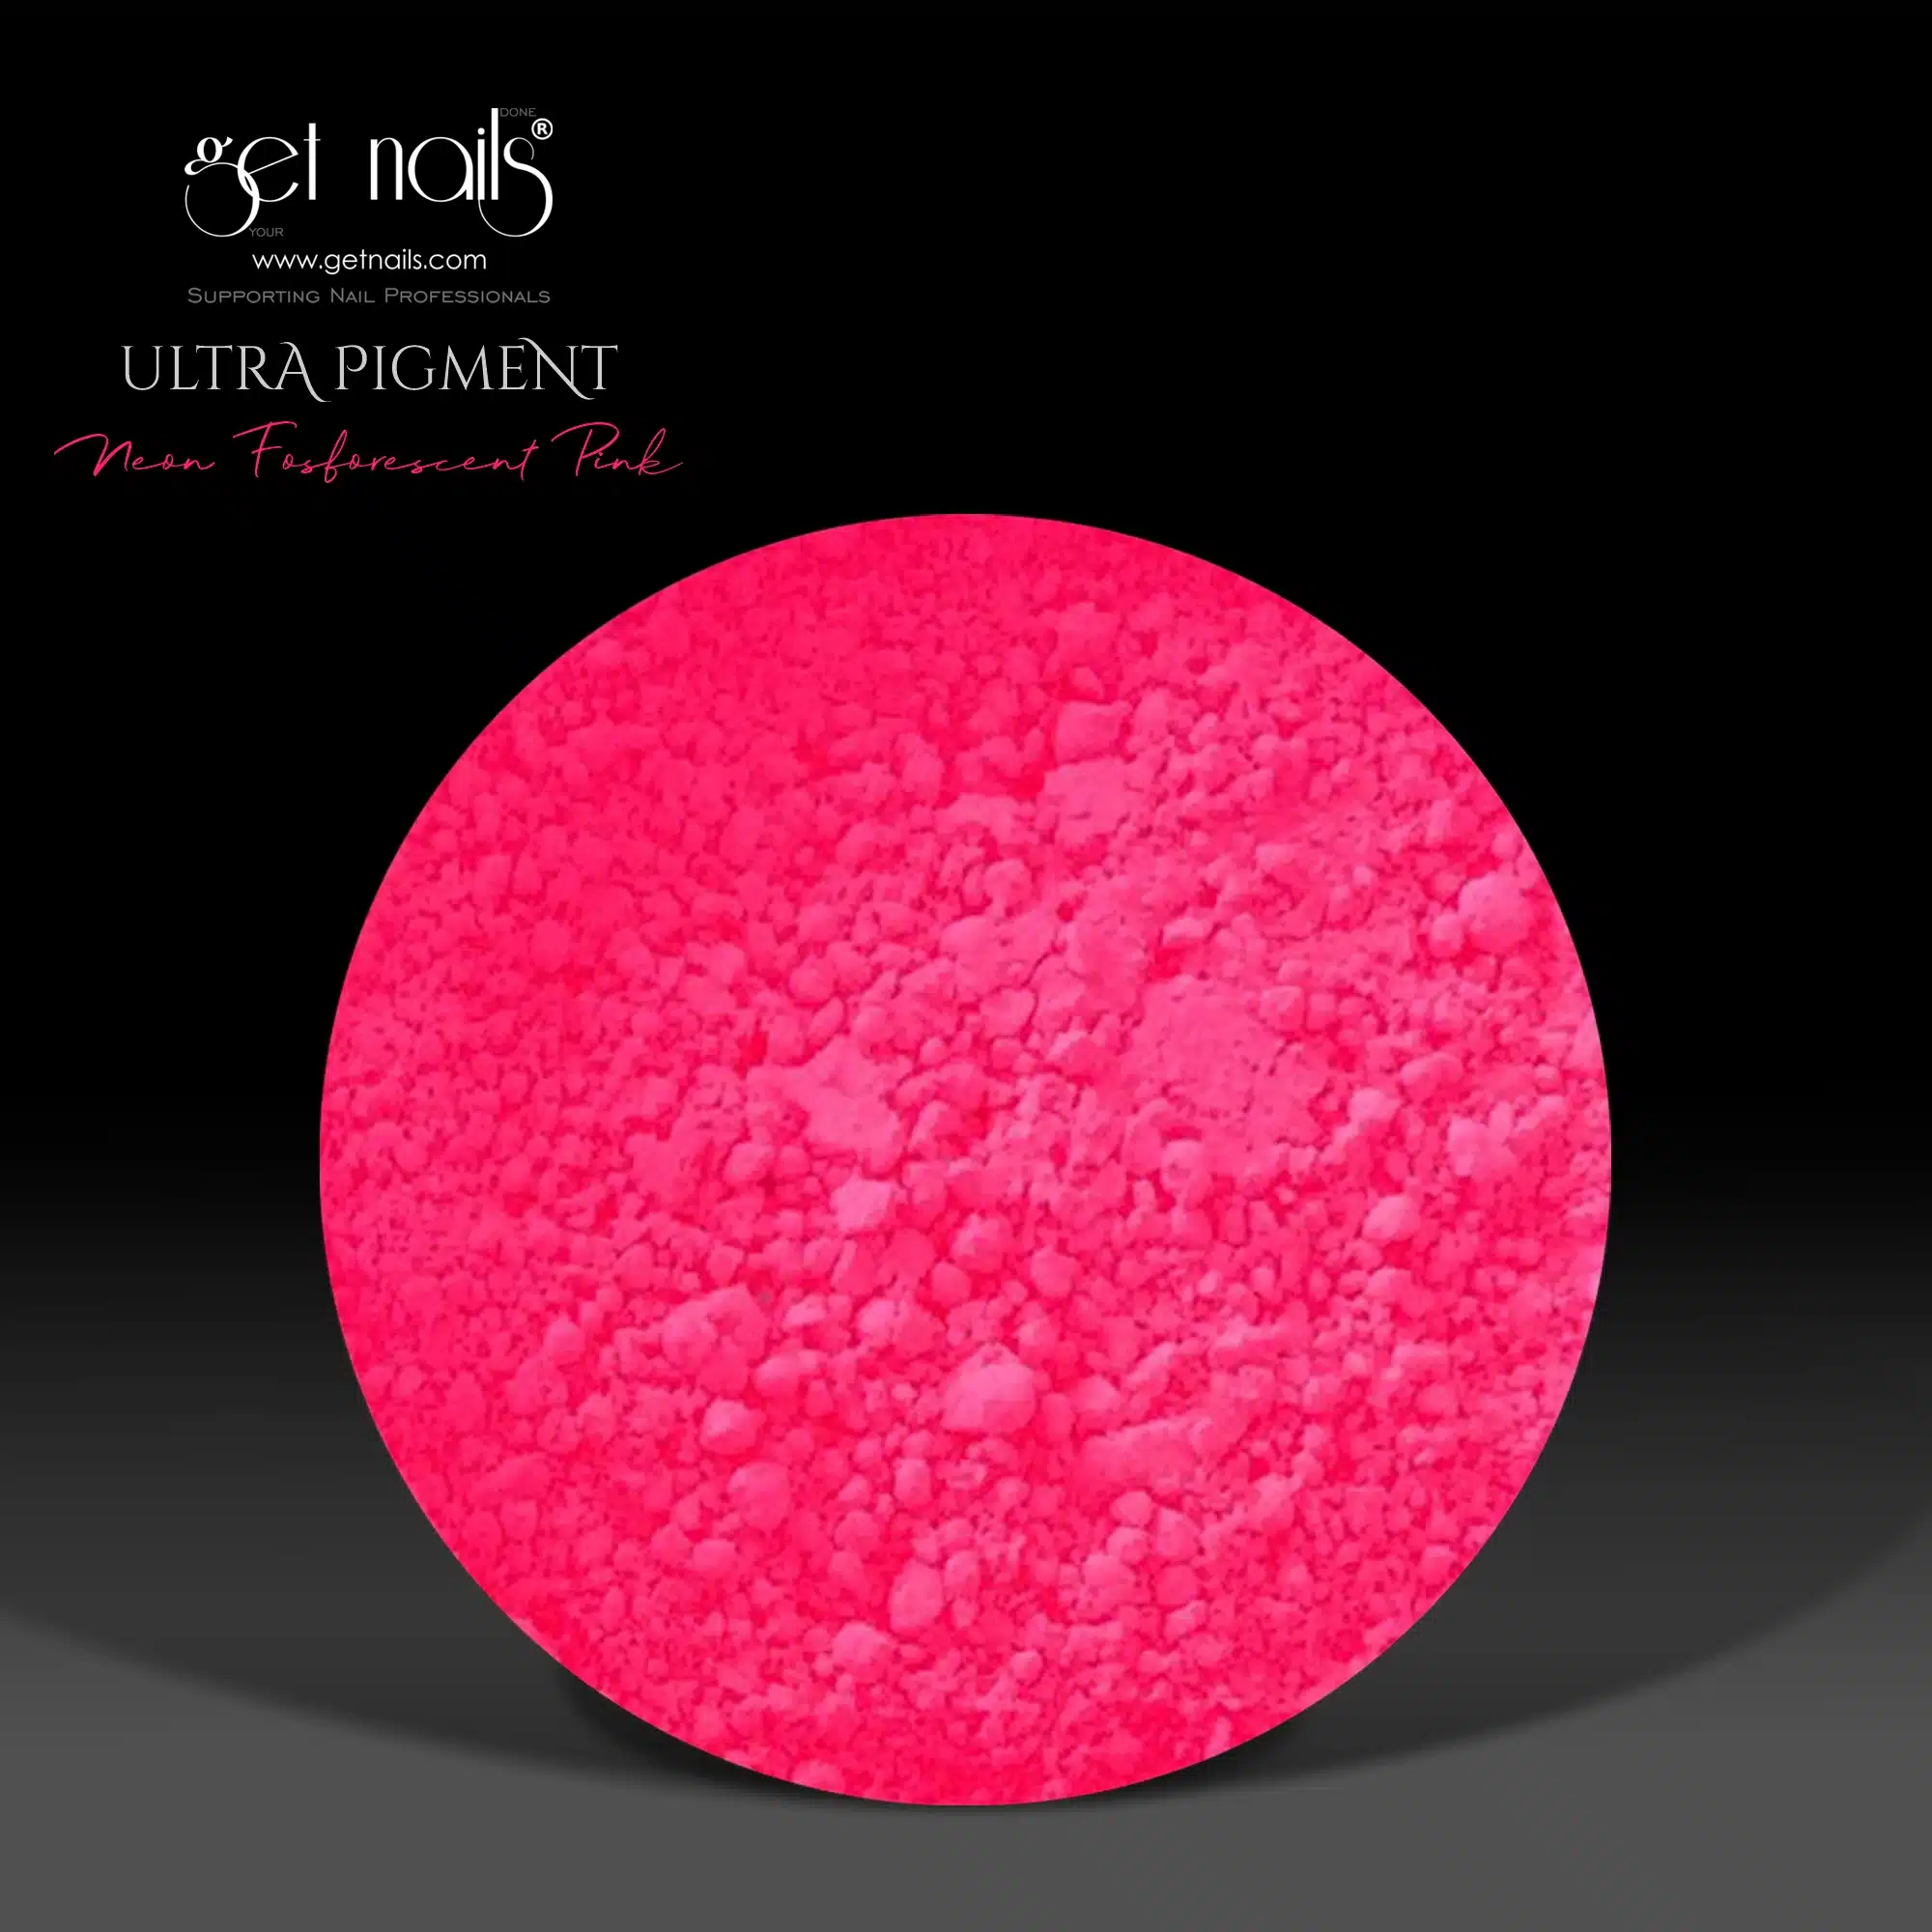 Get Nails Austria - Ultra Pigment Neon Fosforescente Rosa 5g